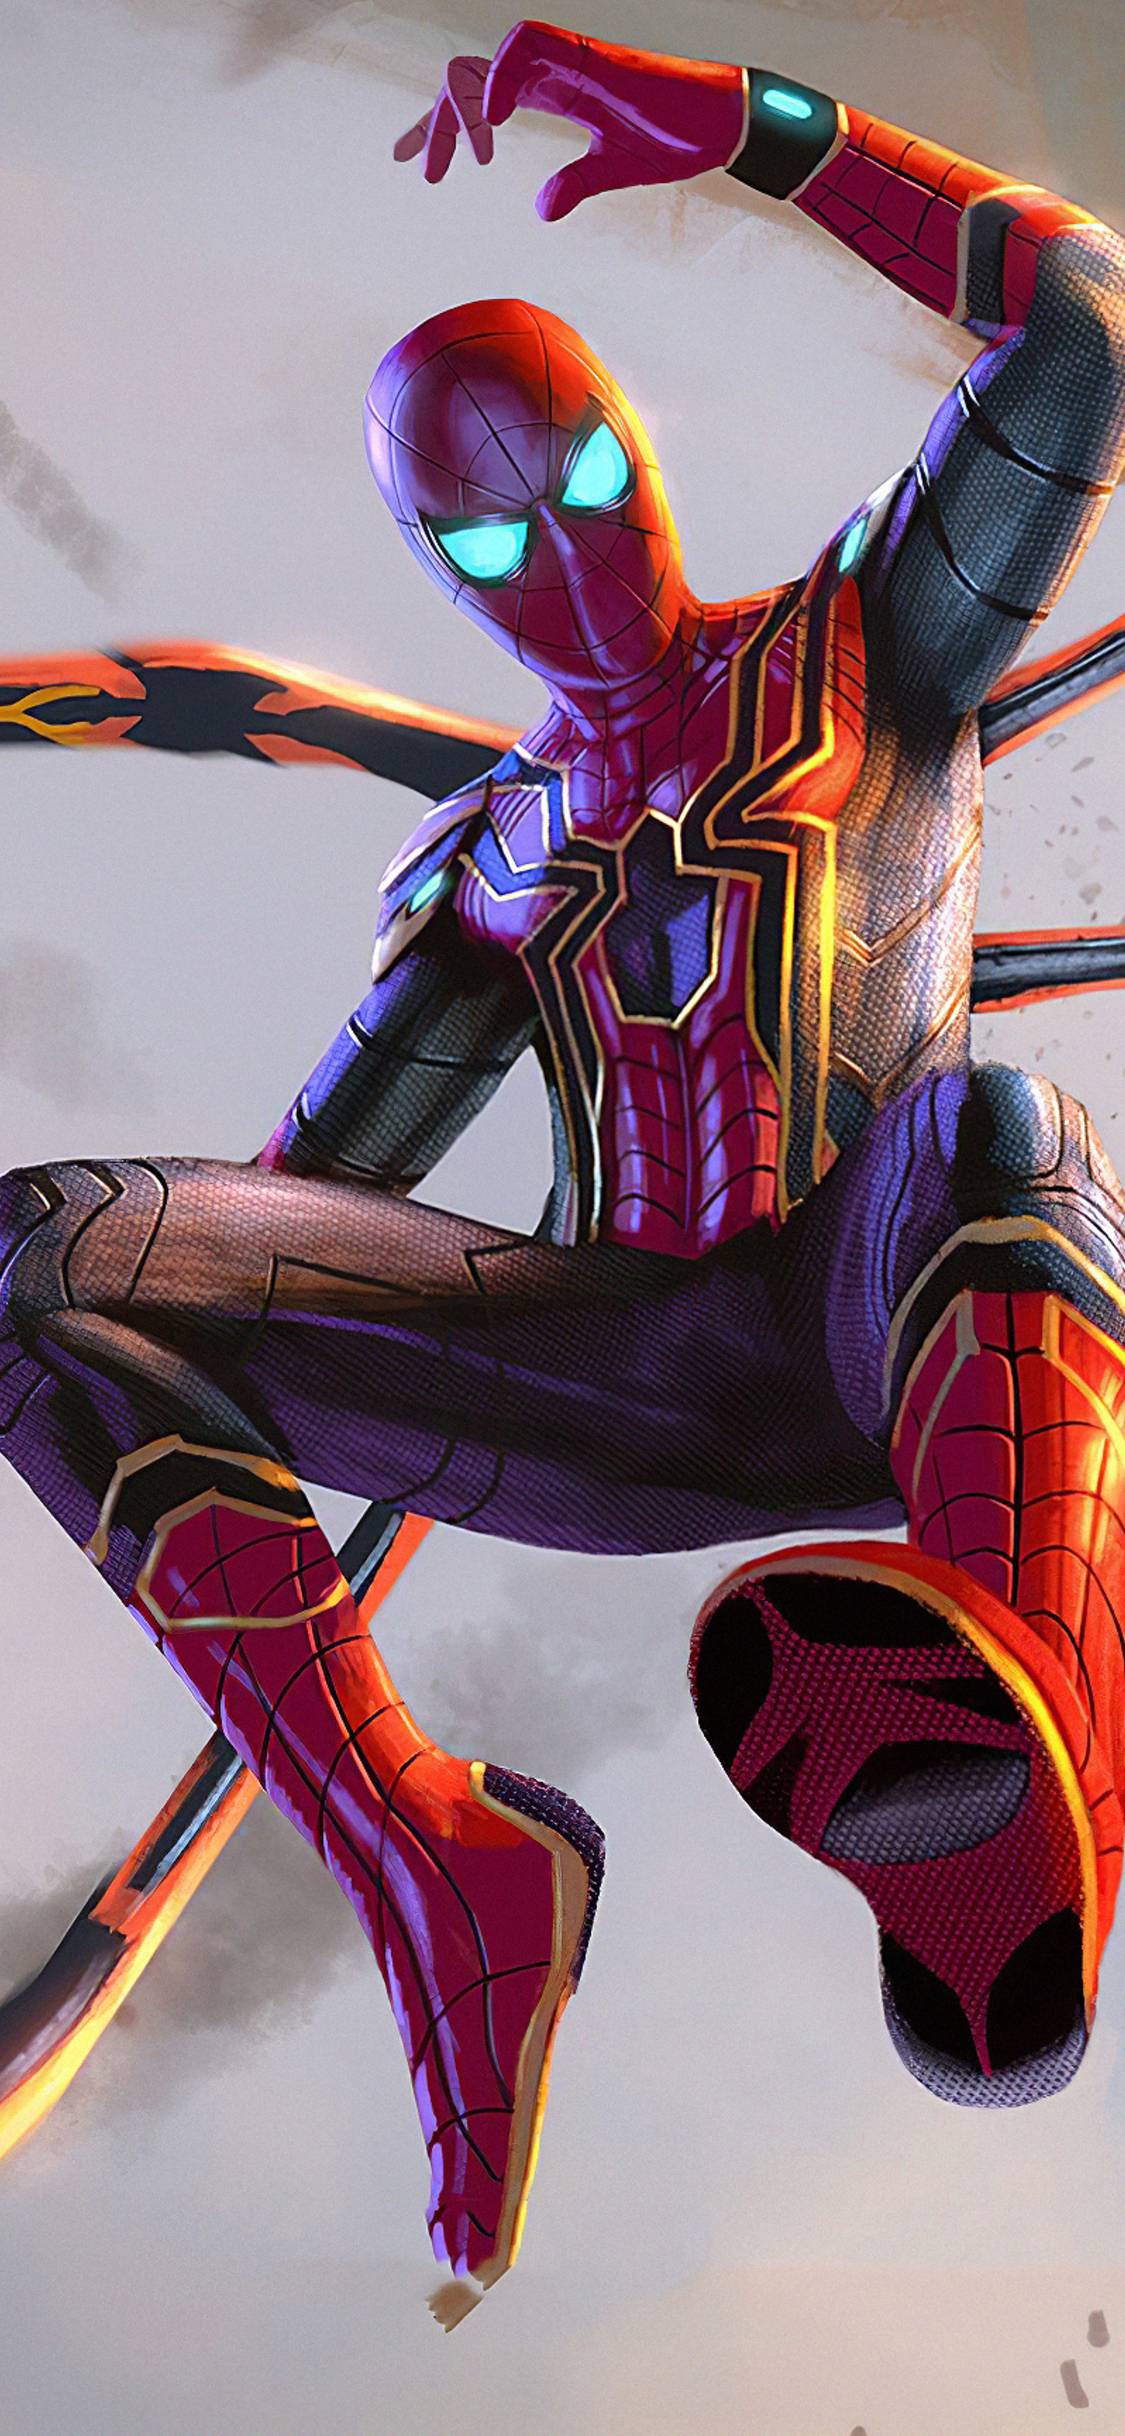 Spiderman Aesthetic Wallpapers - Top Free Spiderman Aesthetic ...